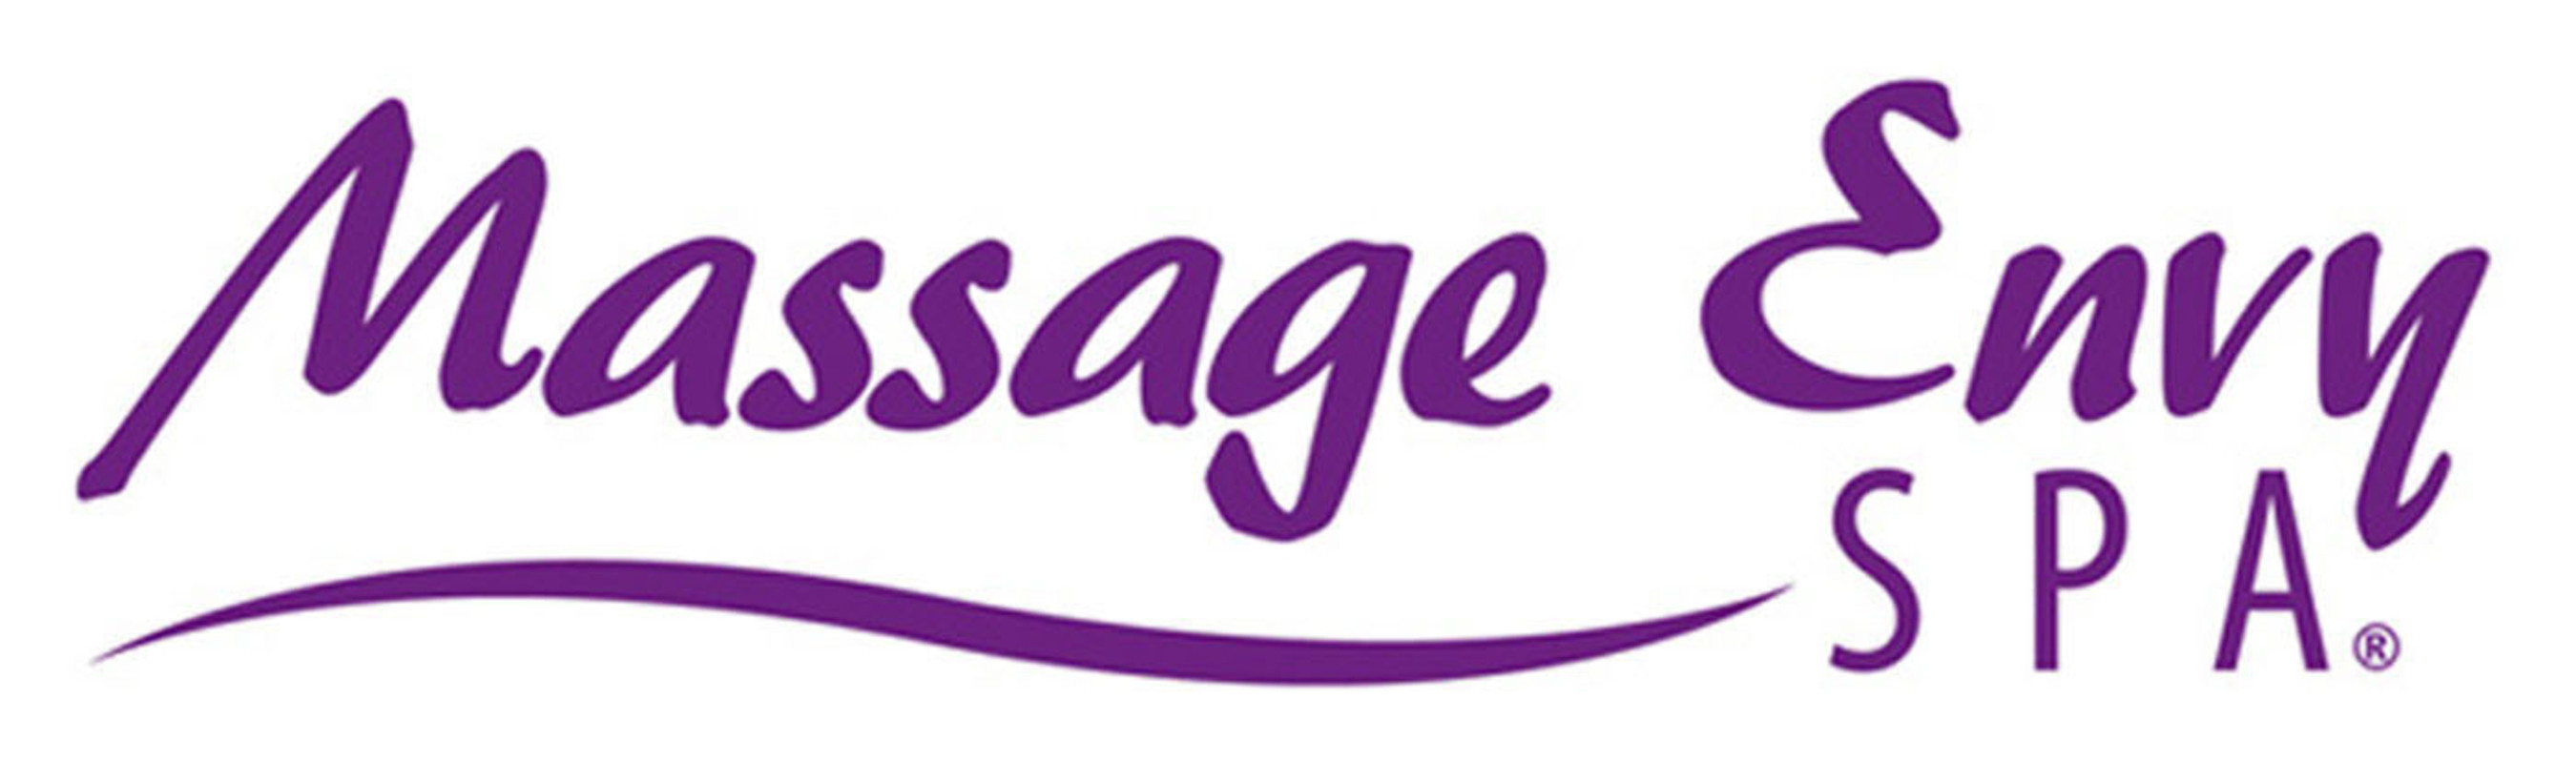 Massage Envy Spa. (PRNewsFoto/Massage Envy) (PRNewsFoto/MASSAGE ENVY)